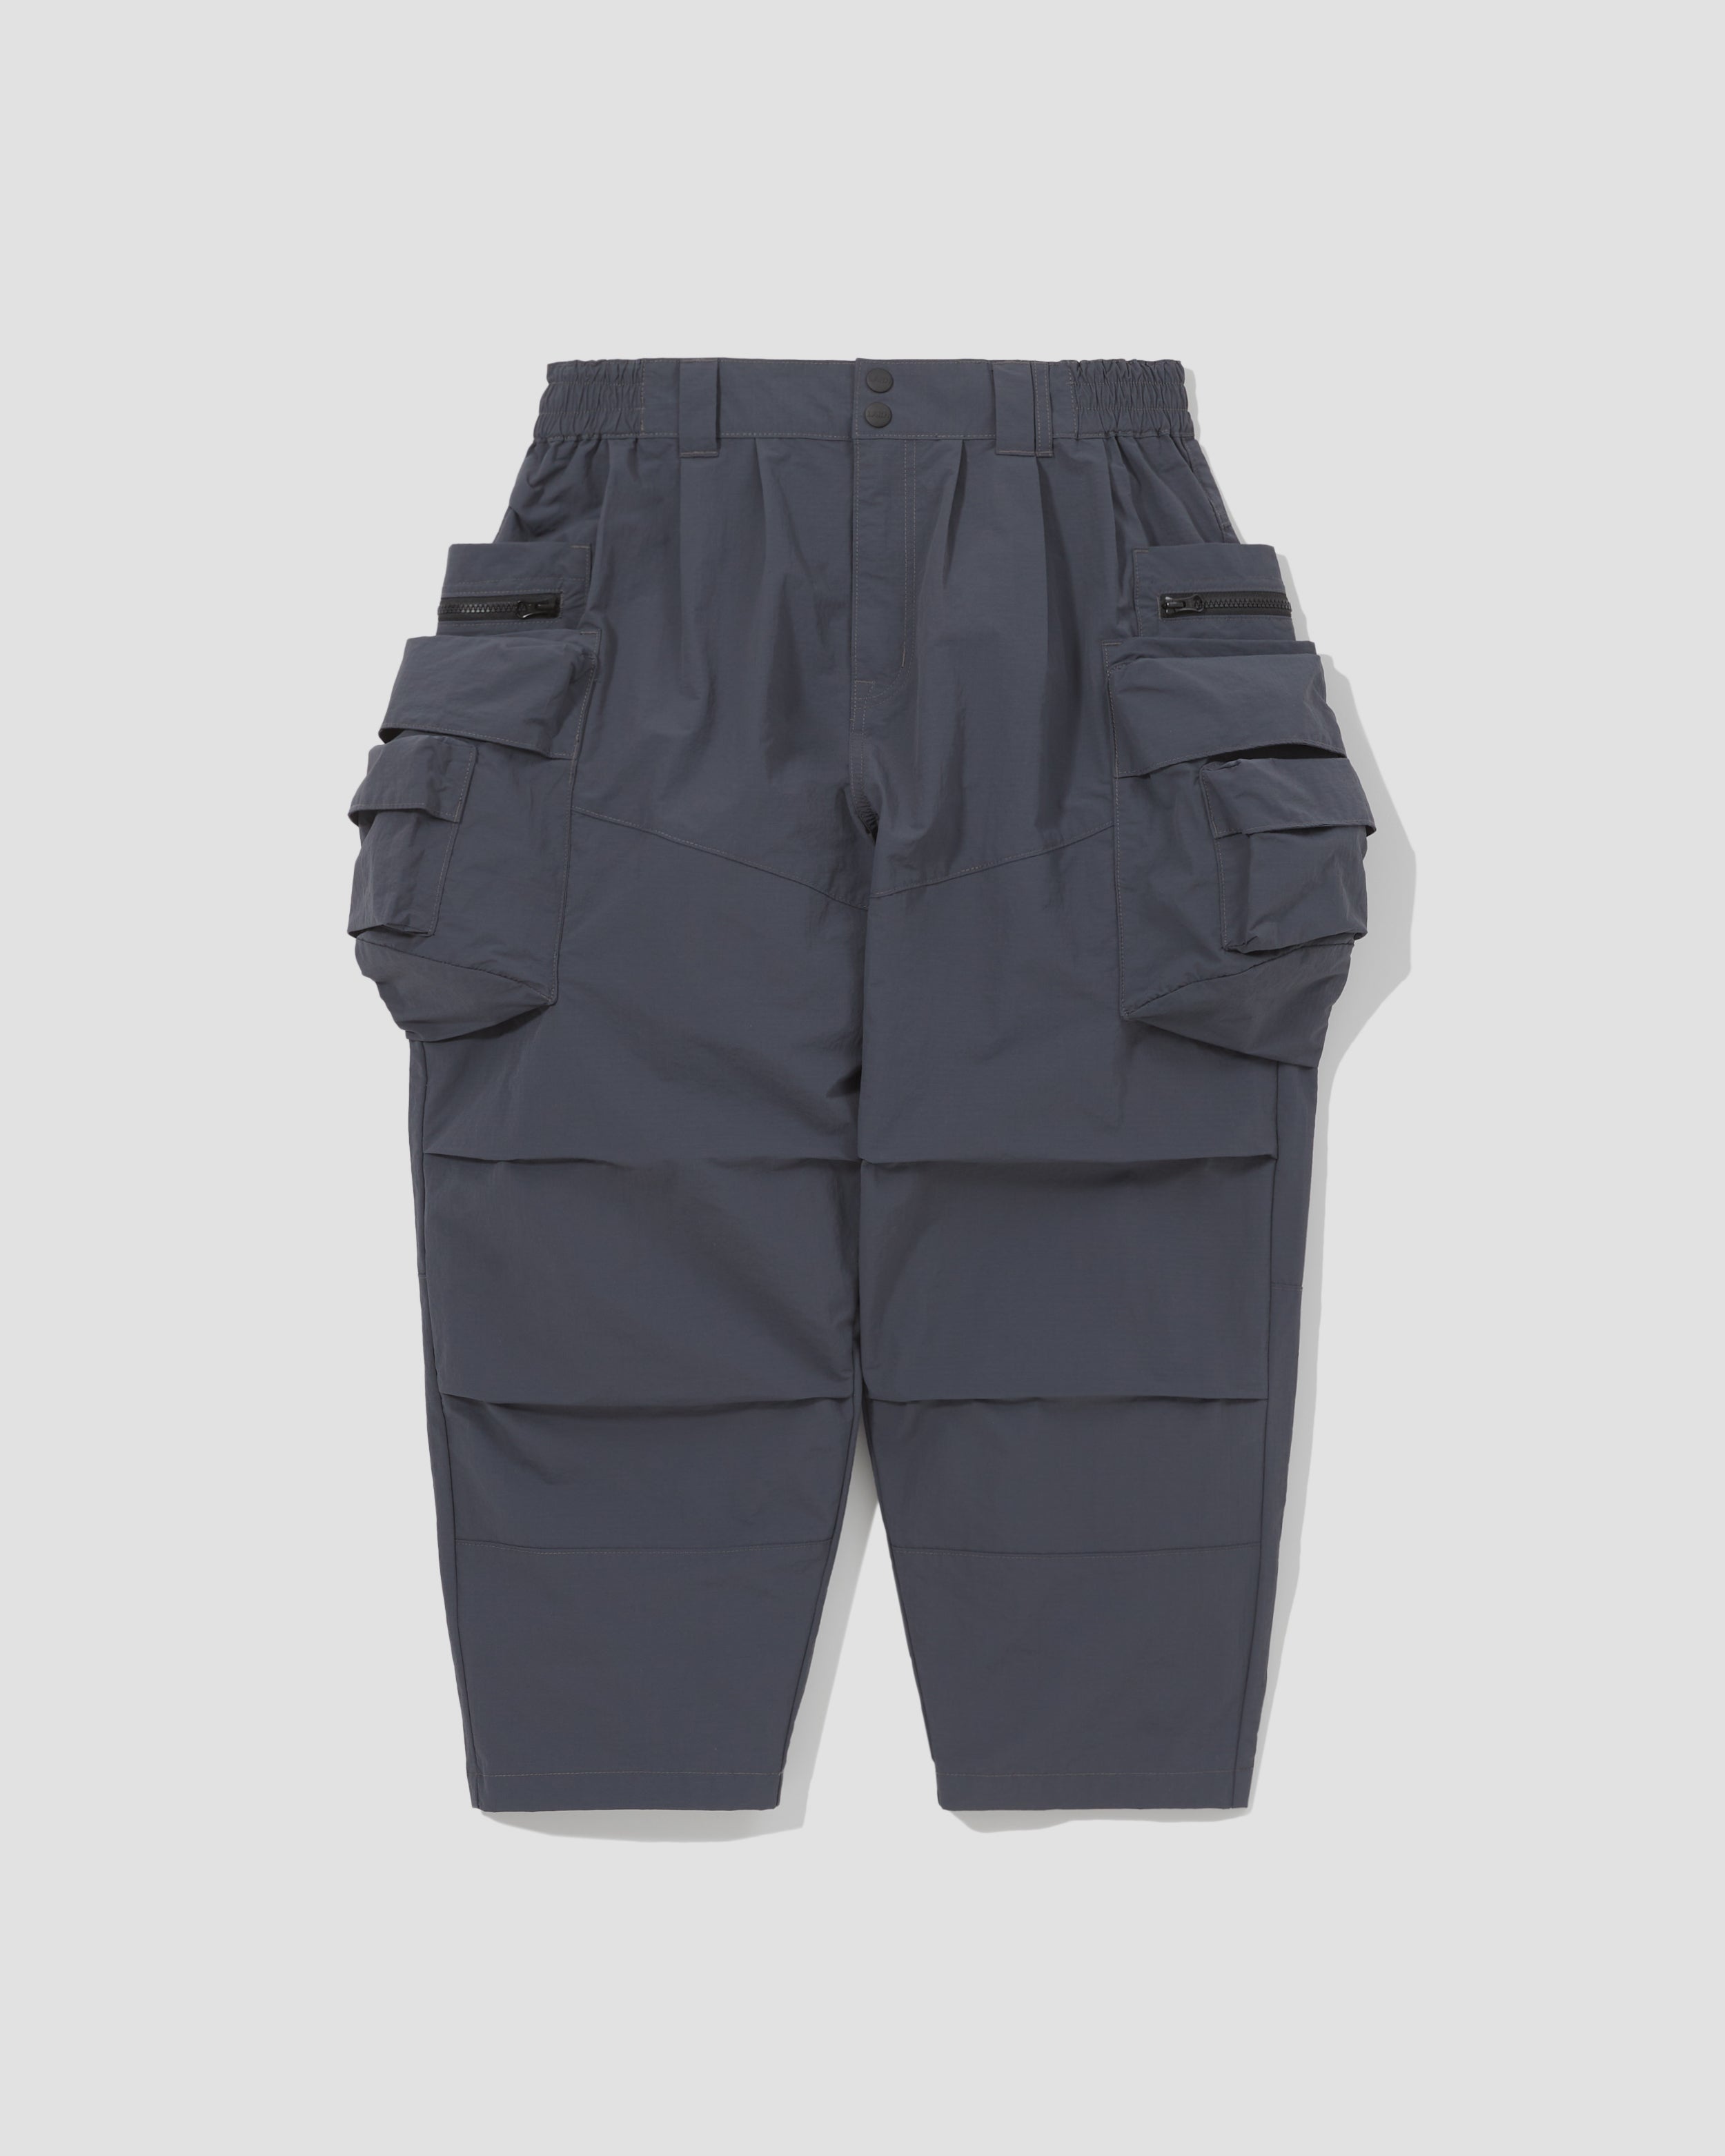 Patch Pockets Utility Pants - Steel Blue